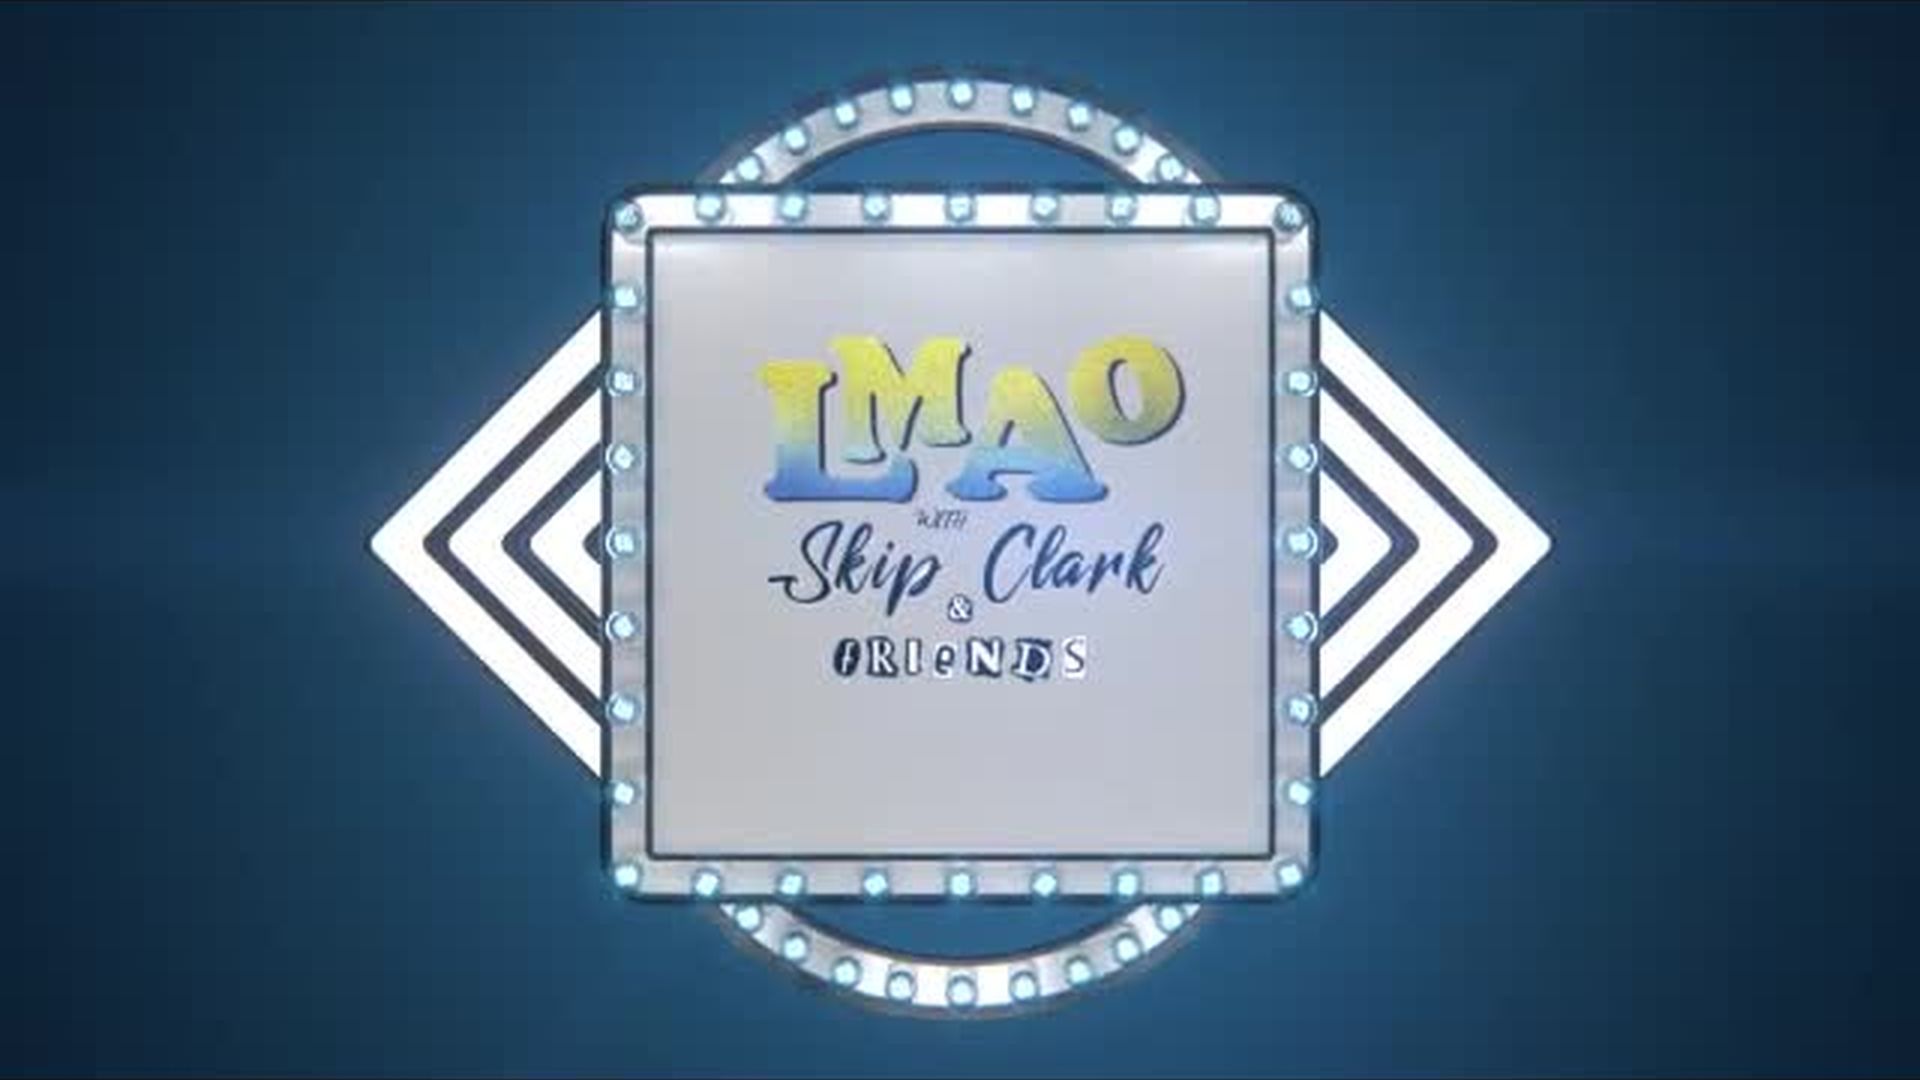 LMAO w/Skip Clark & Friends - Jay Malik